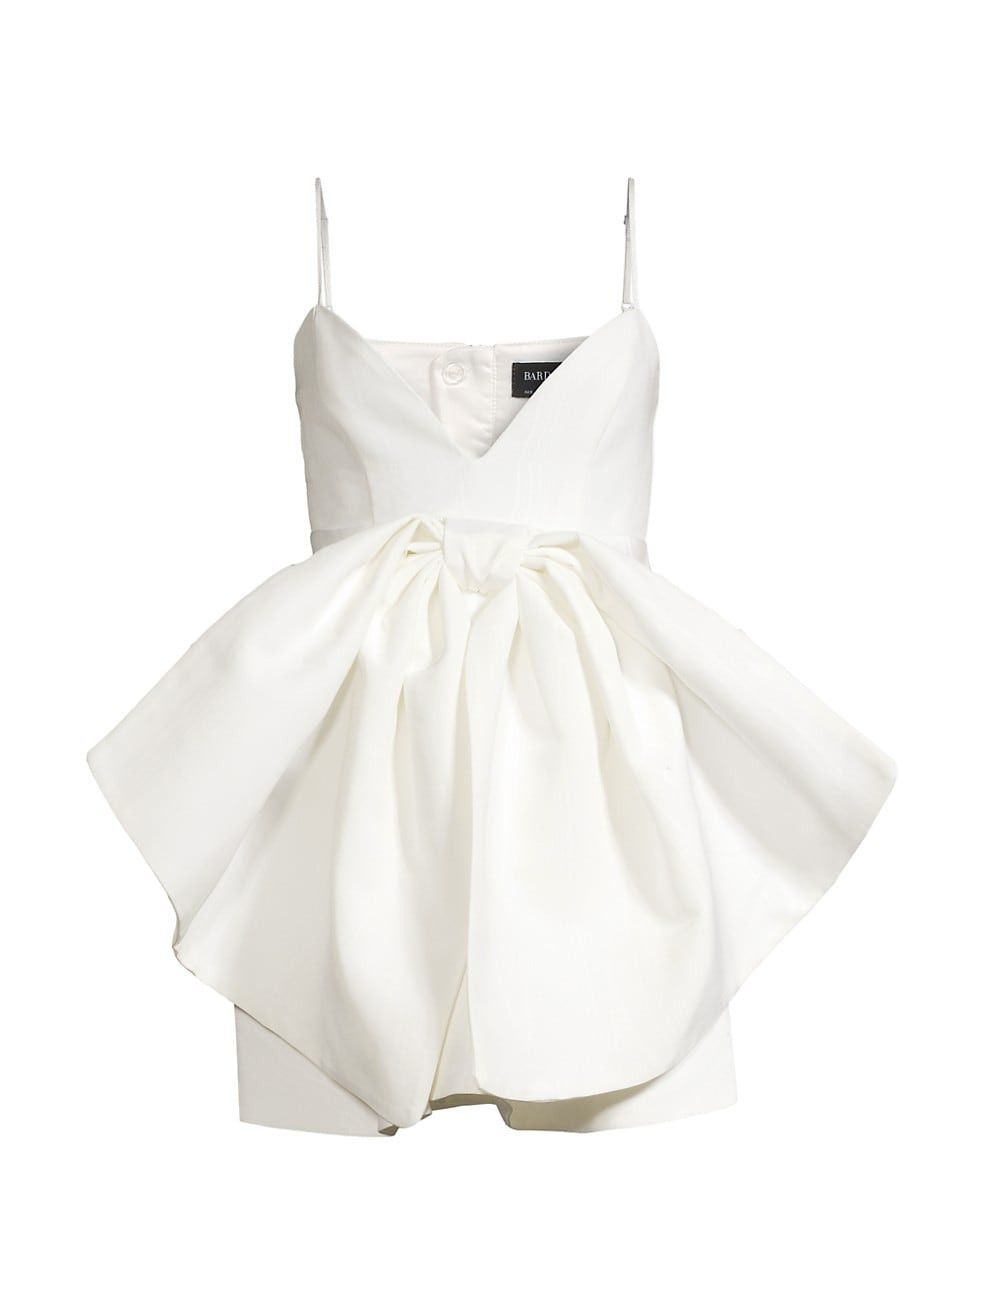 Annabelle Statement Bow Minidress | Bride To Be | White Bow Dress | White Dresses  | Saks Fifth Avenue